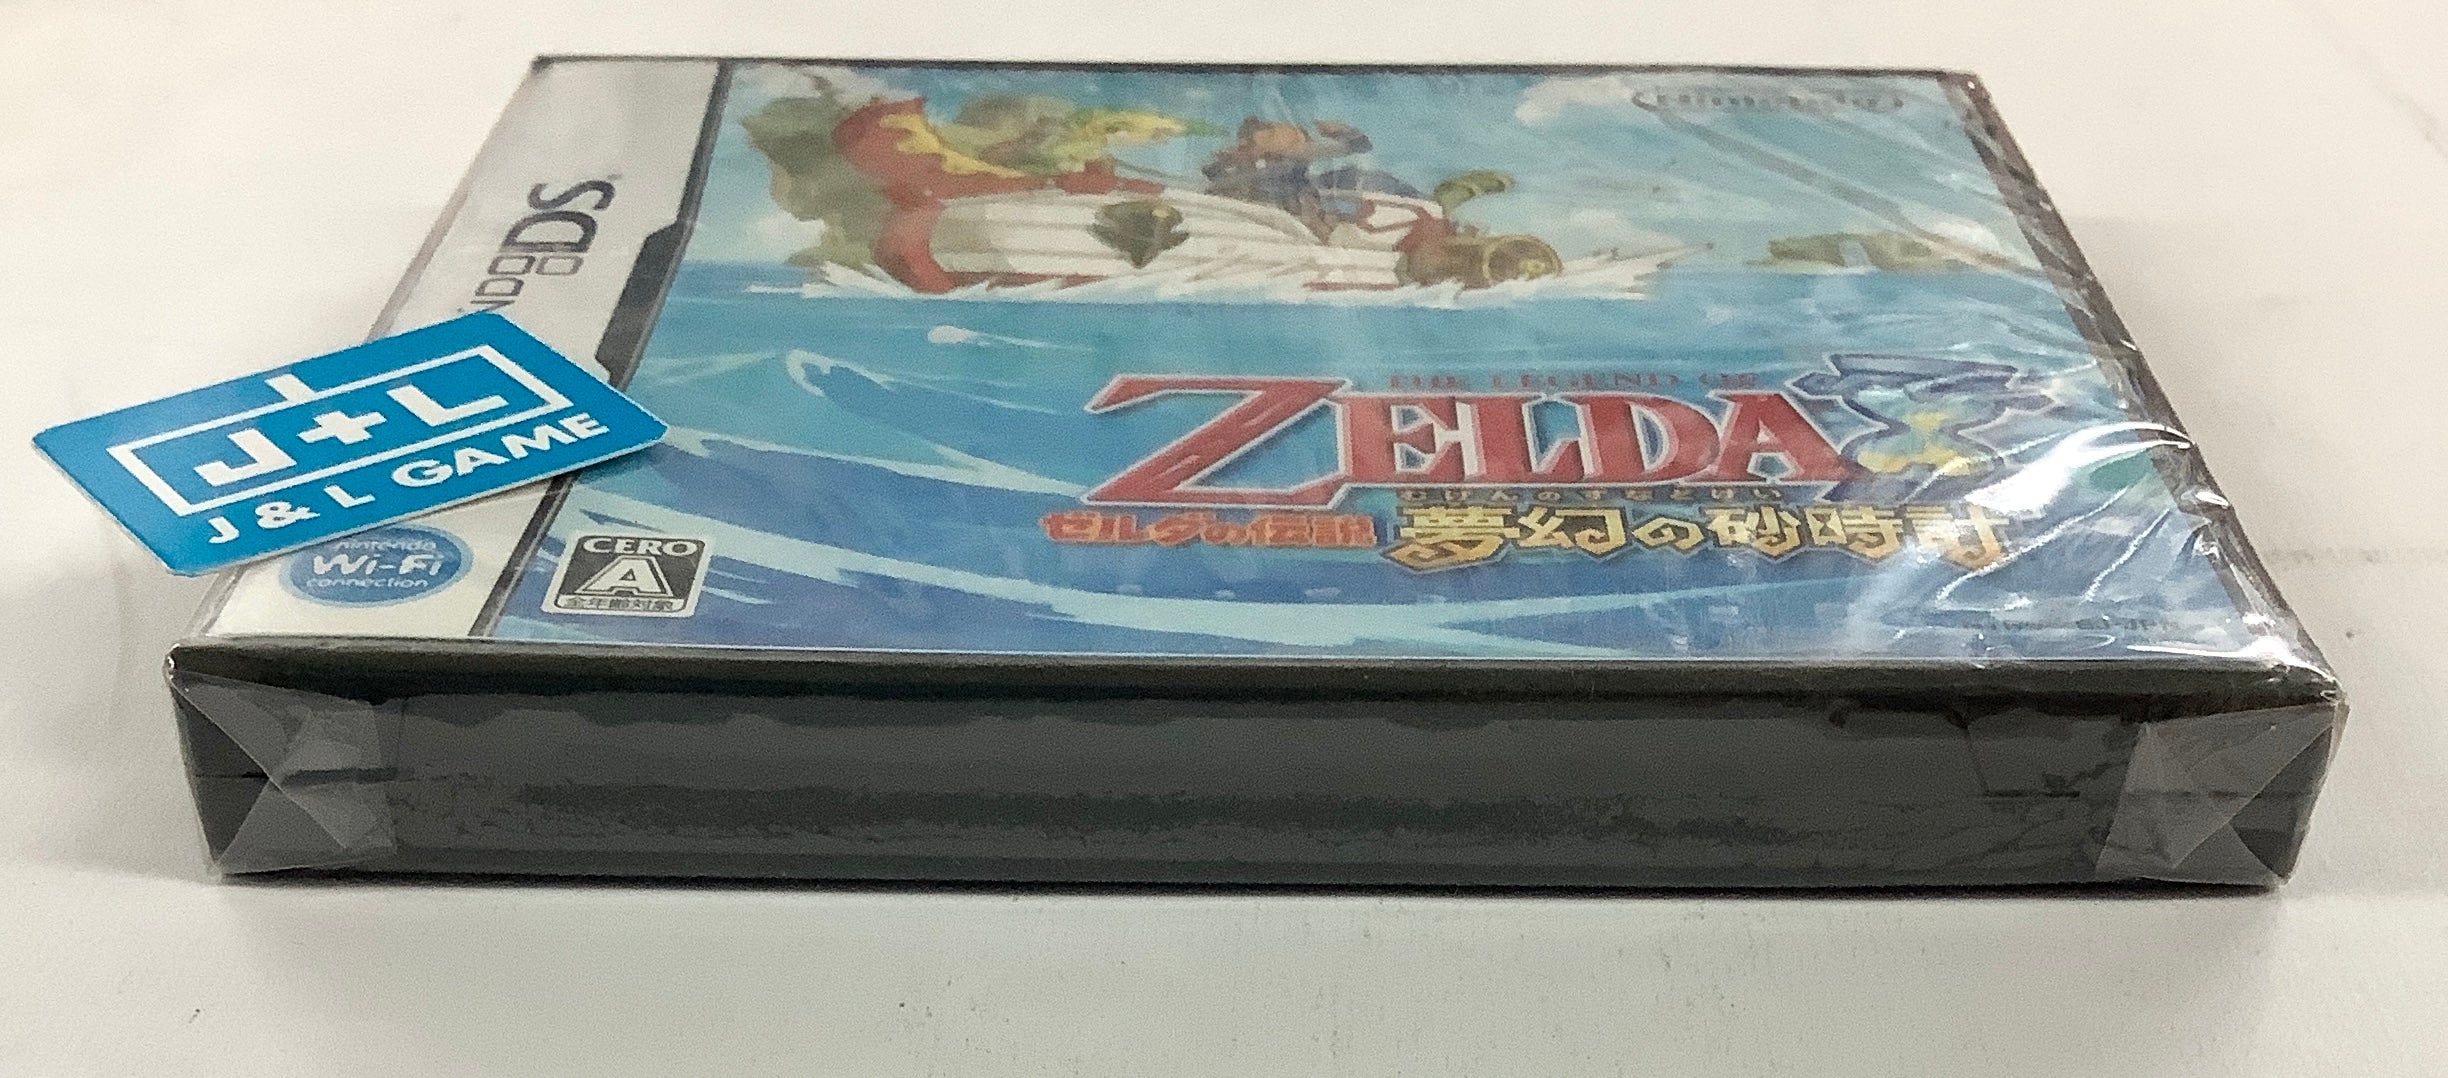 Zelda no Densetsu: Mugen no Sunadokei - (NDS) Nintendo DS (Japanese Import) Video Games Nintendo   